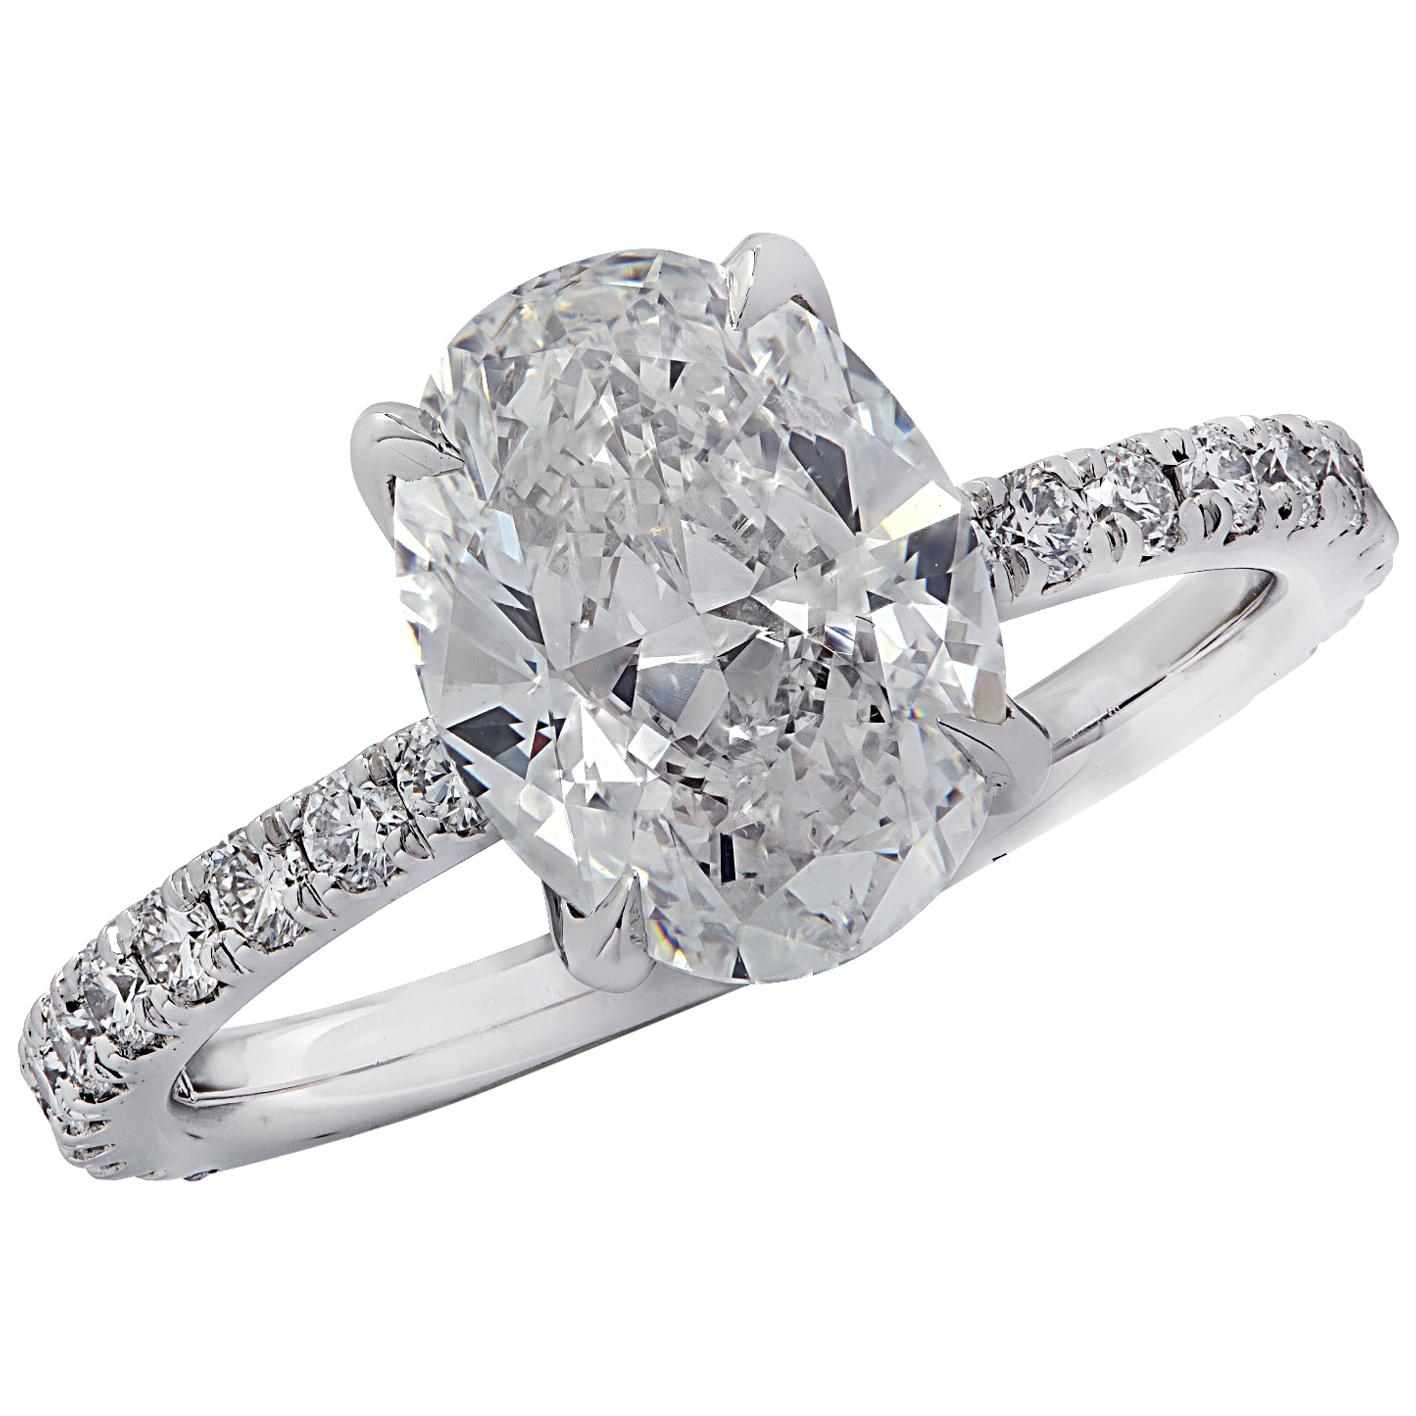 Vivid Diamonds GIA Certified 2.01 Carat Oval Cut Diamond Engagement Ring